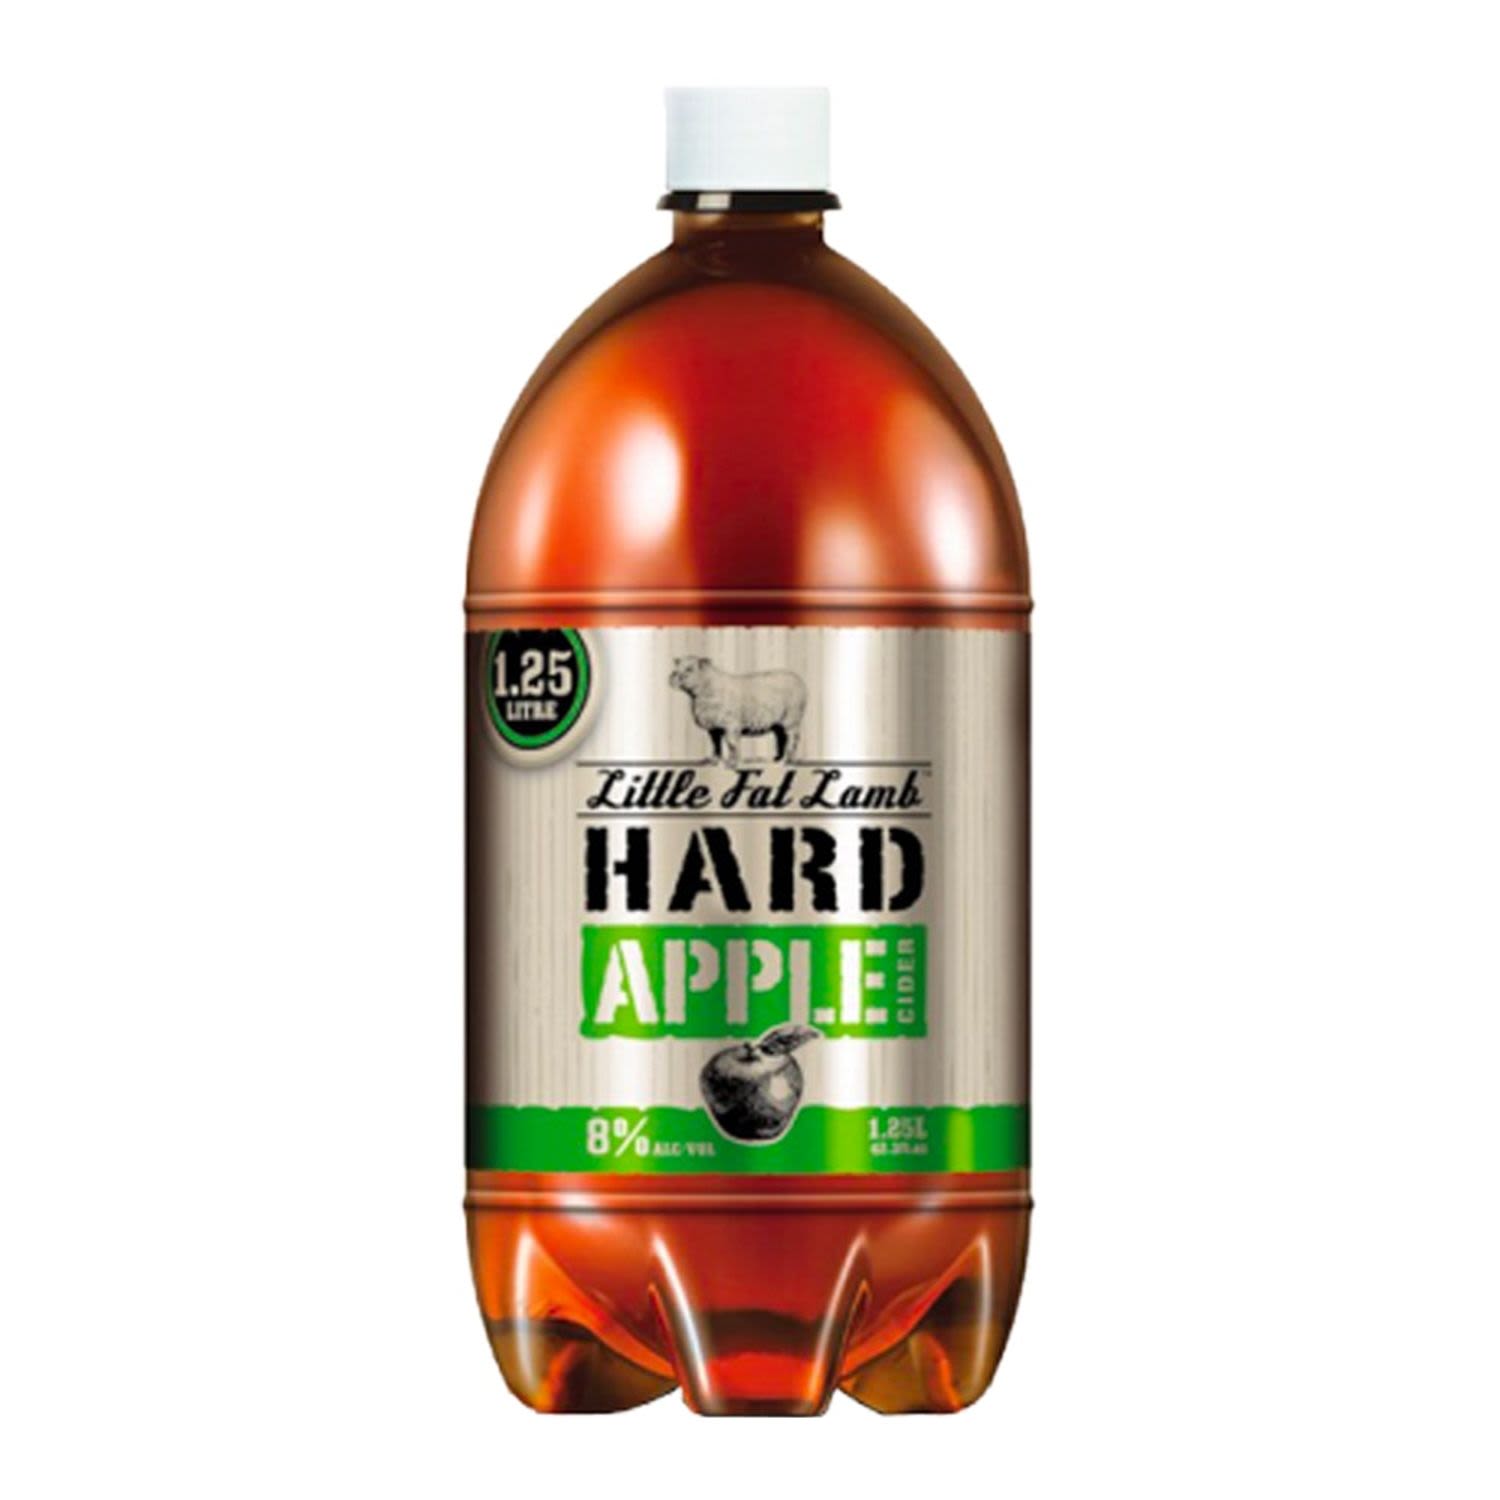 Little Fat Lamb Hard Apple Cider 1.25L Bottle